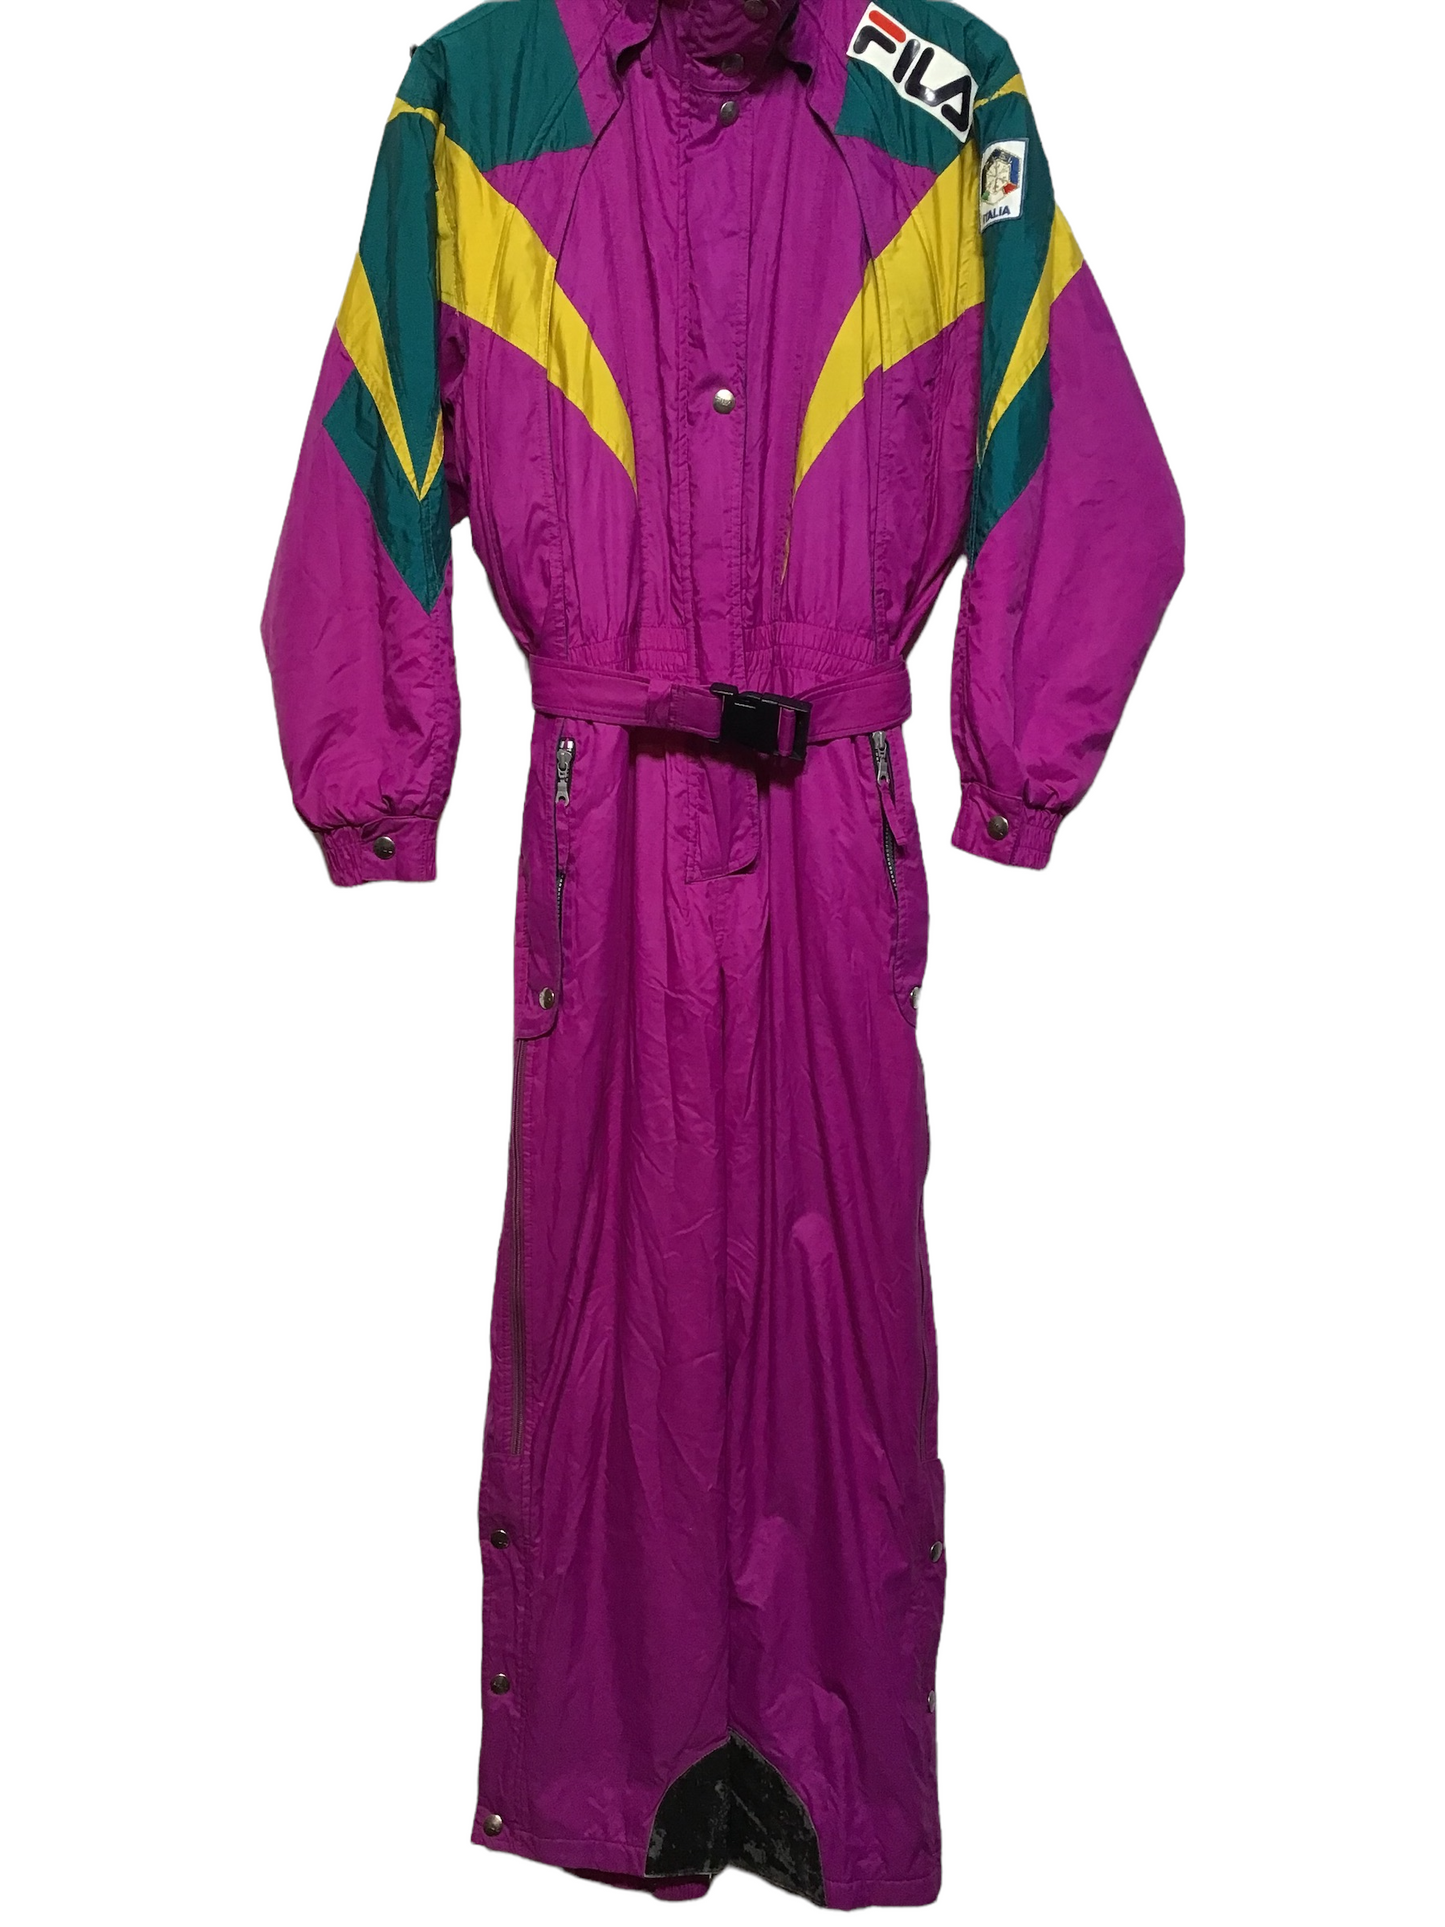 Fila Italia Ski Suit (Size XL)